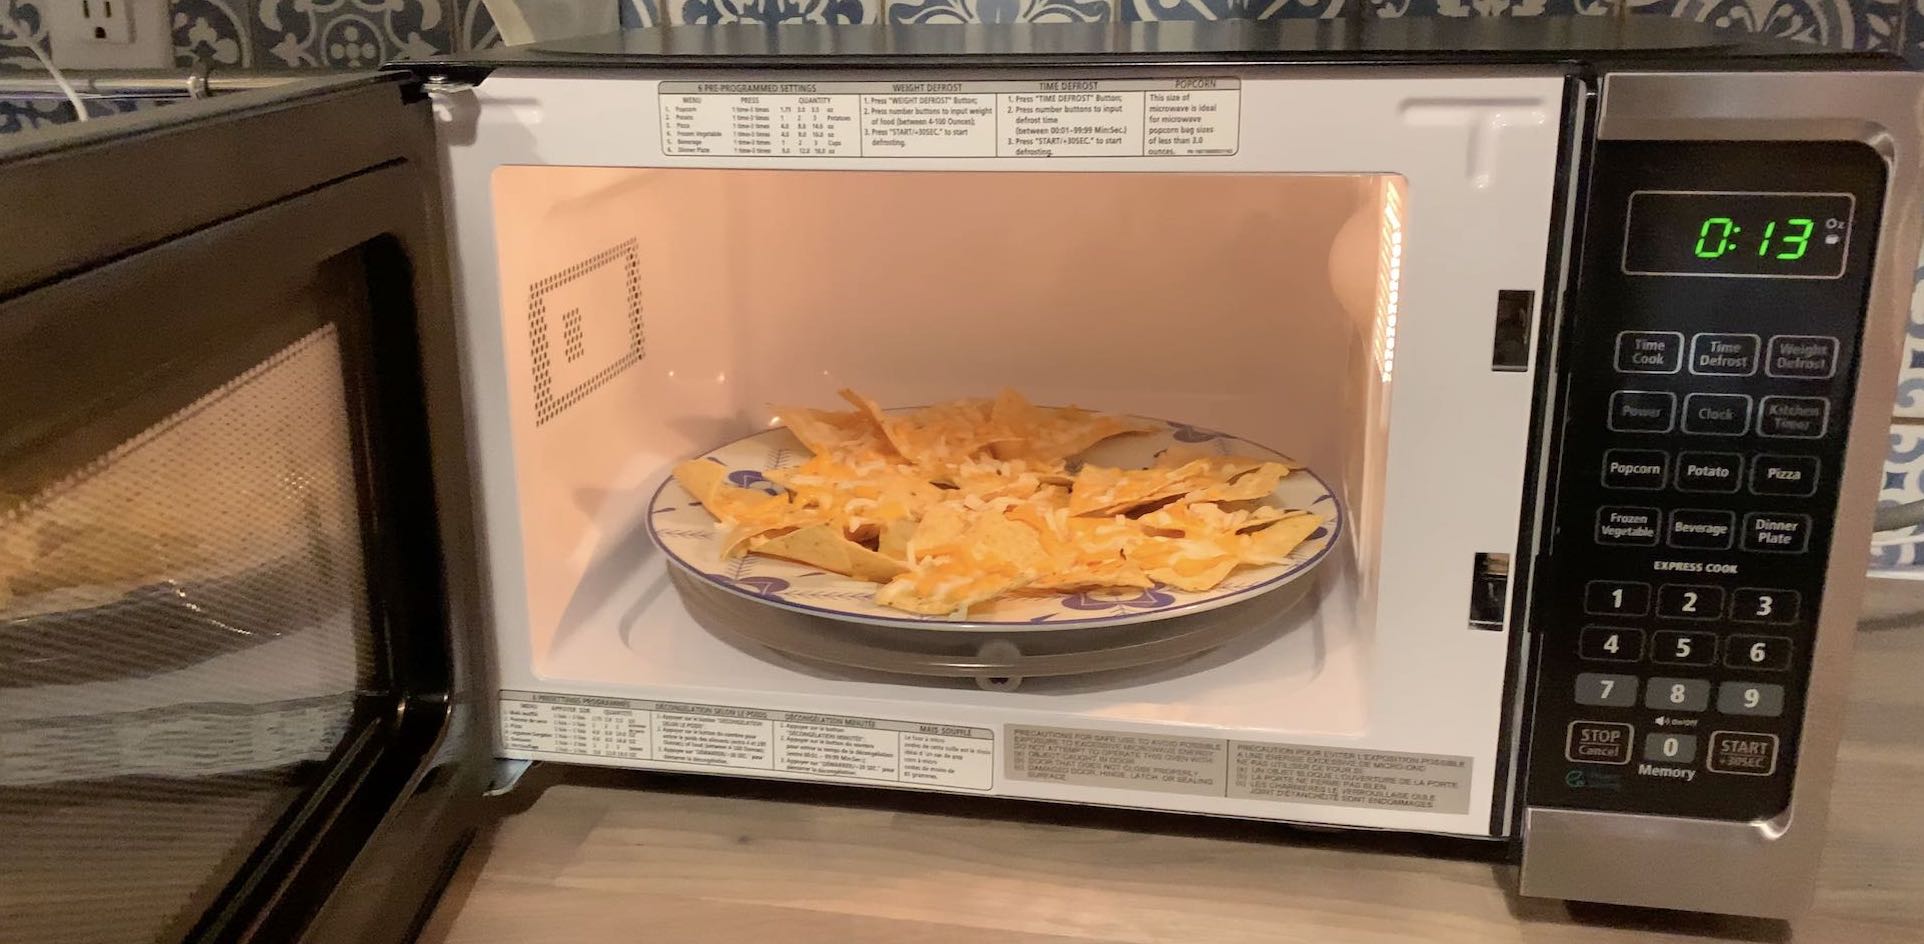 Dinner plate insignia microwave